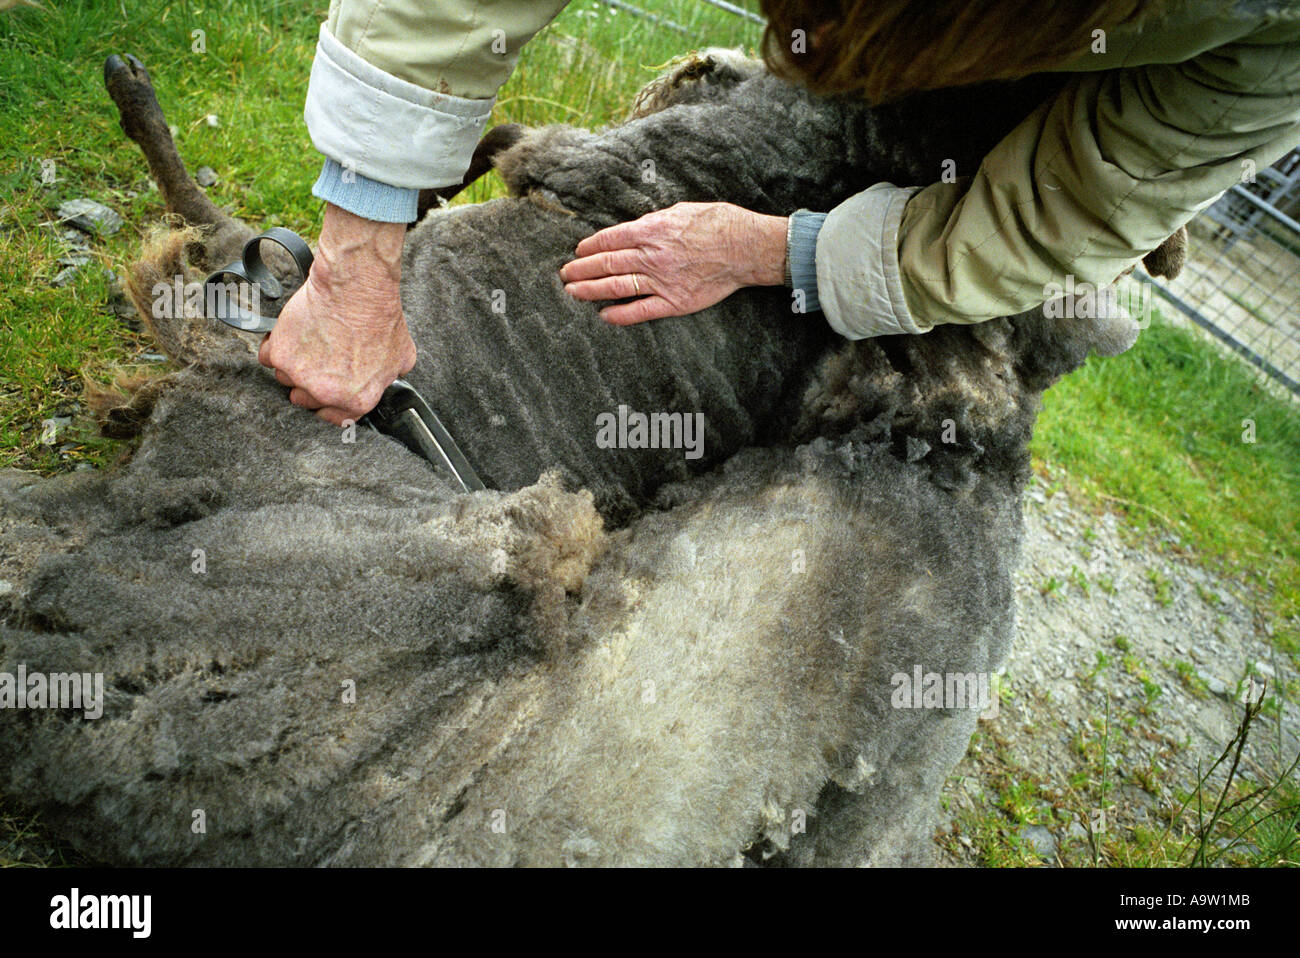 A crofter on Shetland shears her sheep using hand shears. Stock Photo